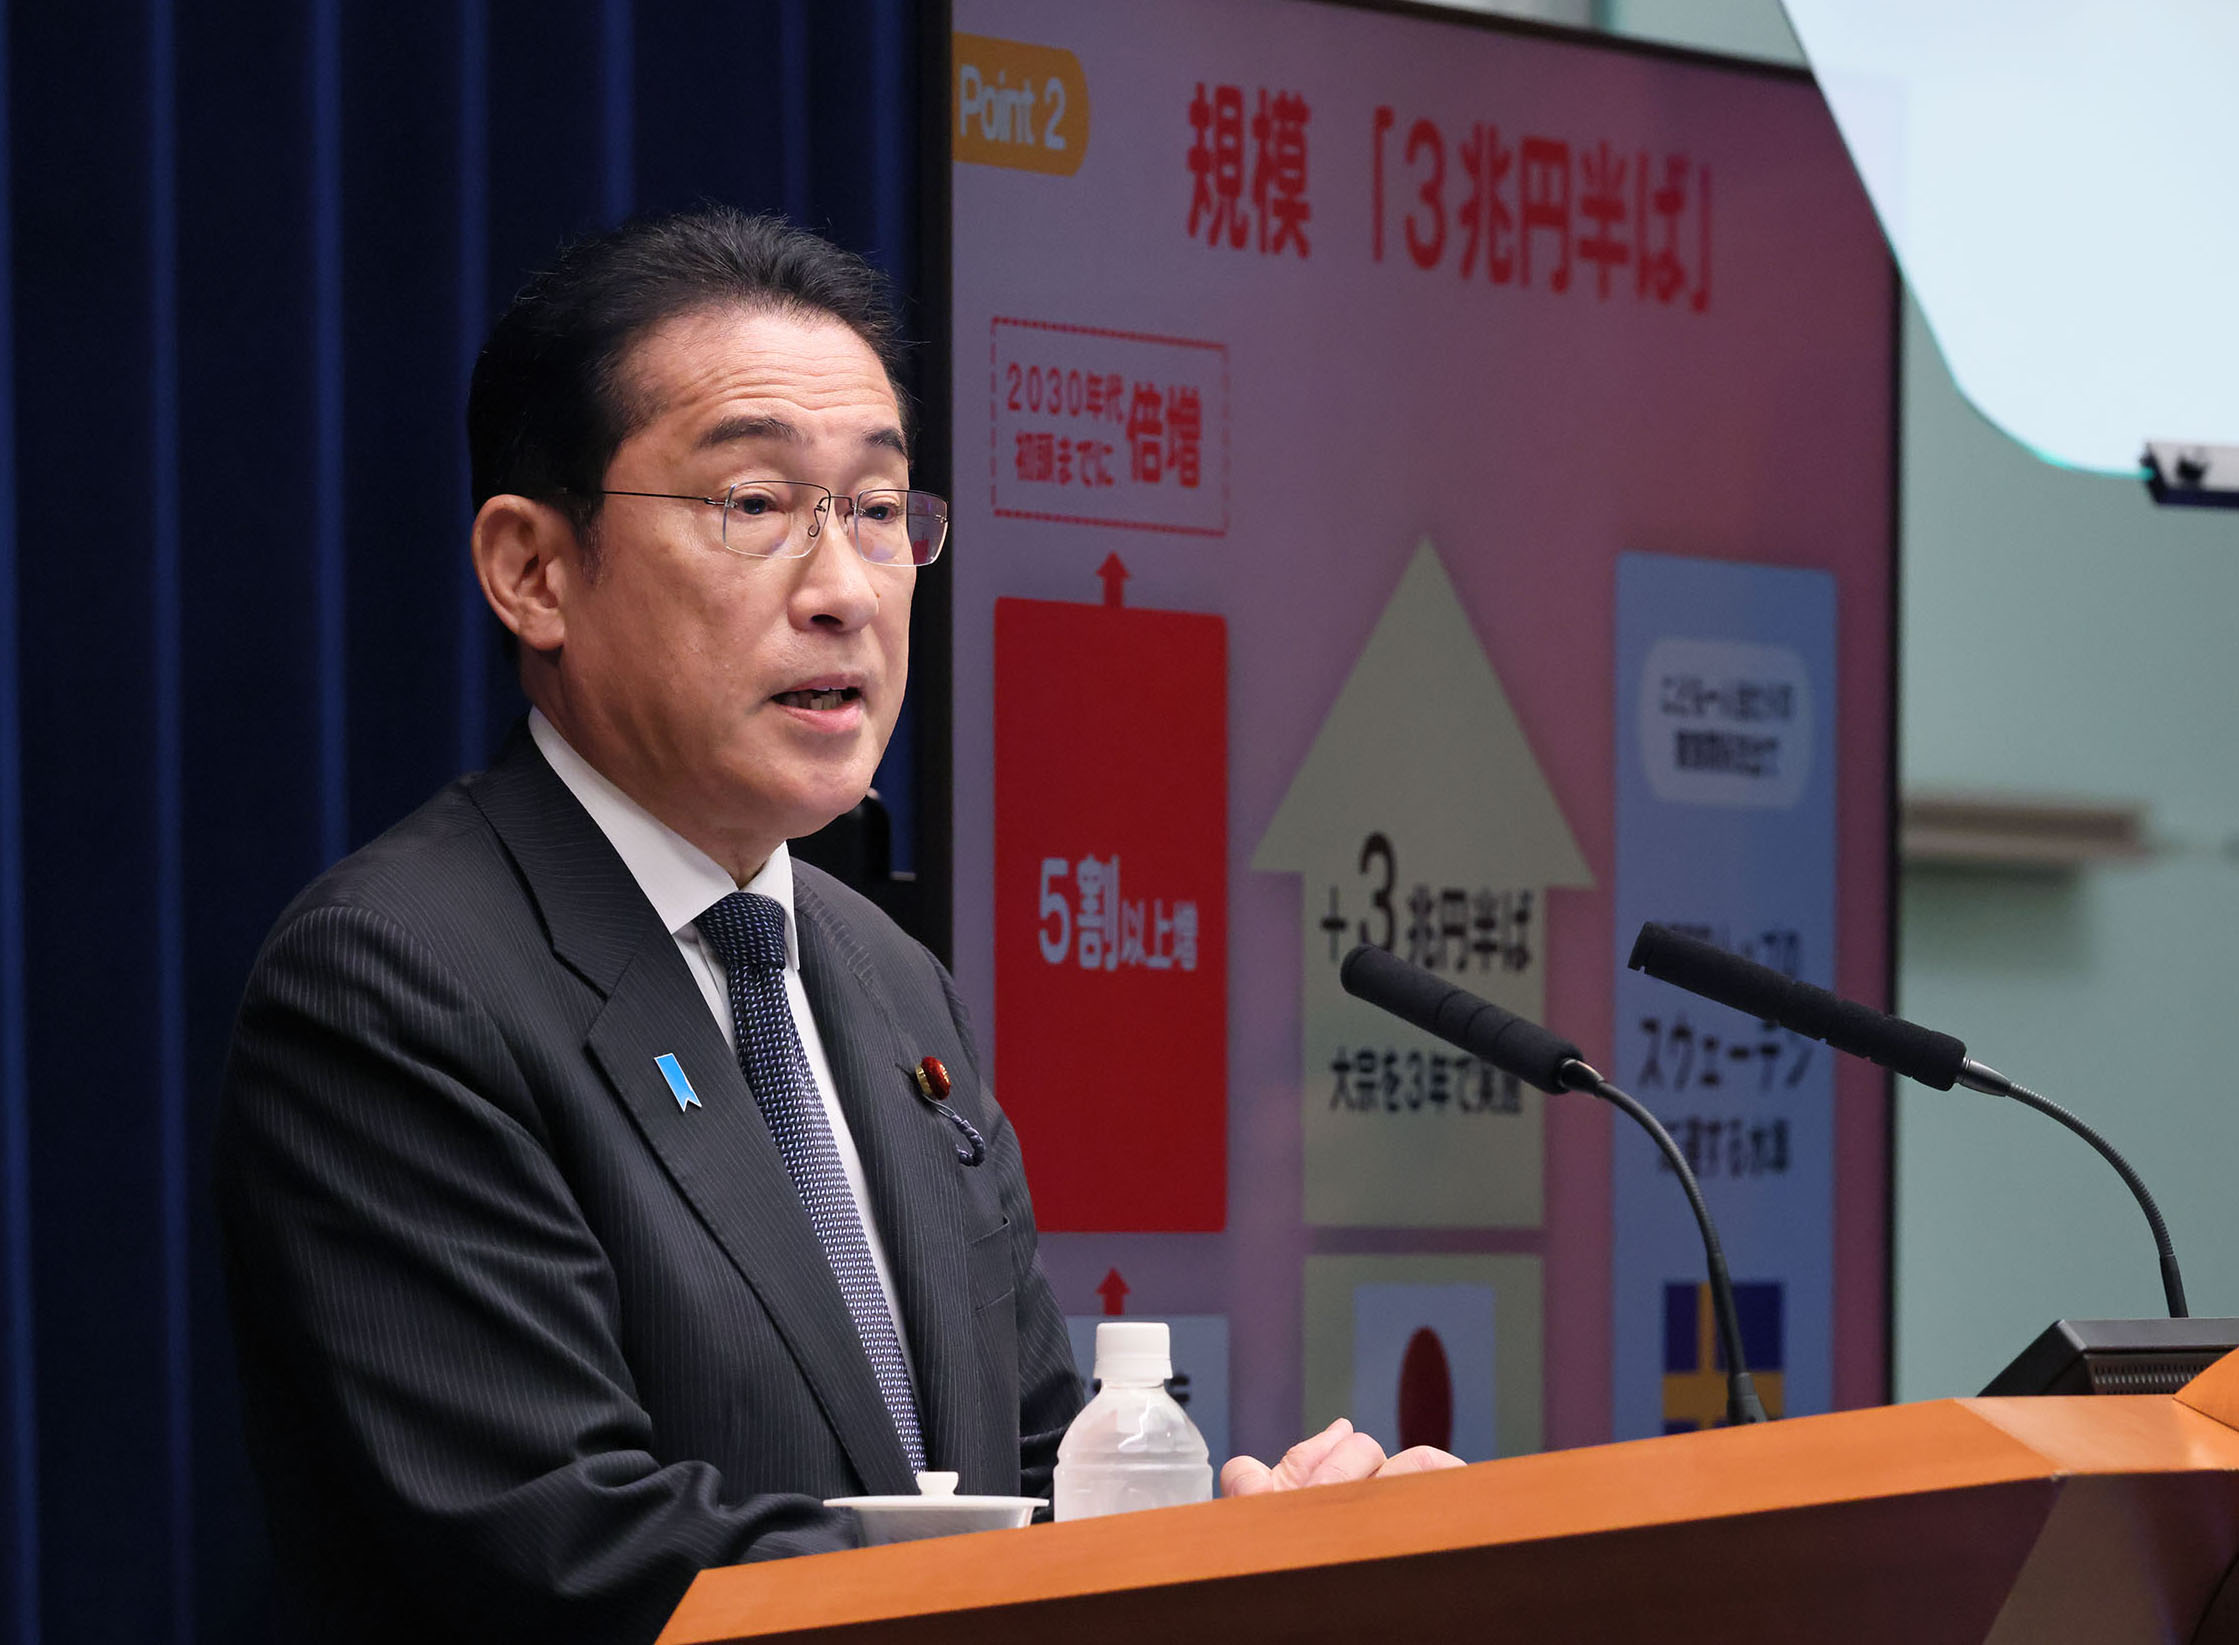 Prime Minister Kishida making an opening statement (5)